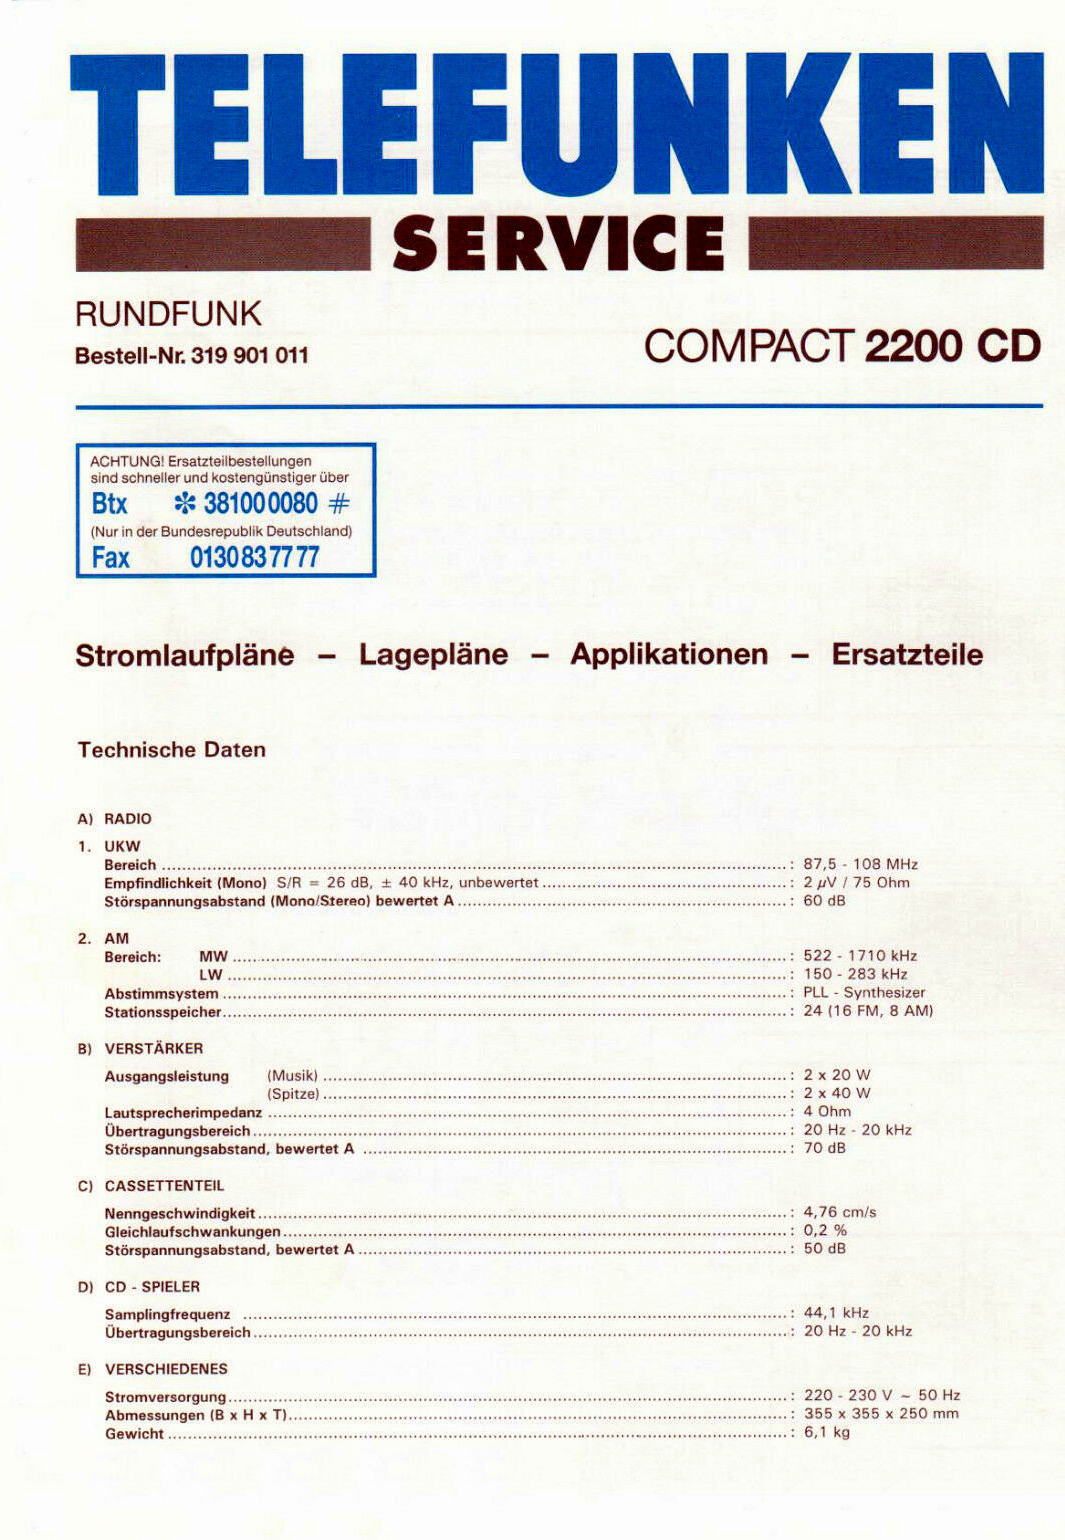 Telefunken Compact-2200 CD-Manual-1993.jpg